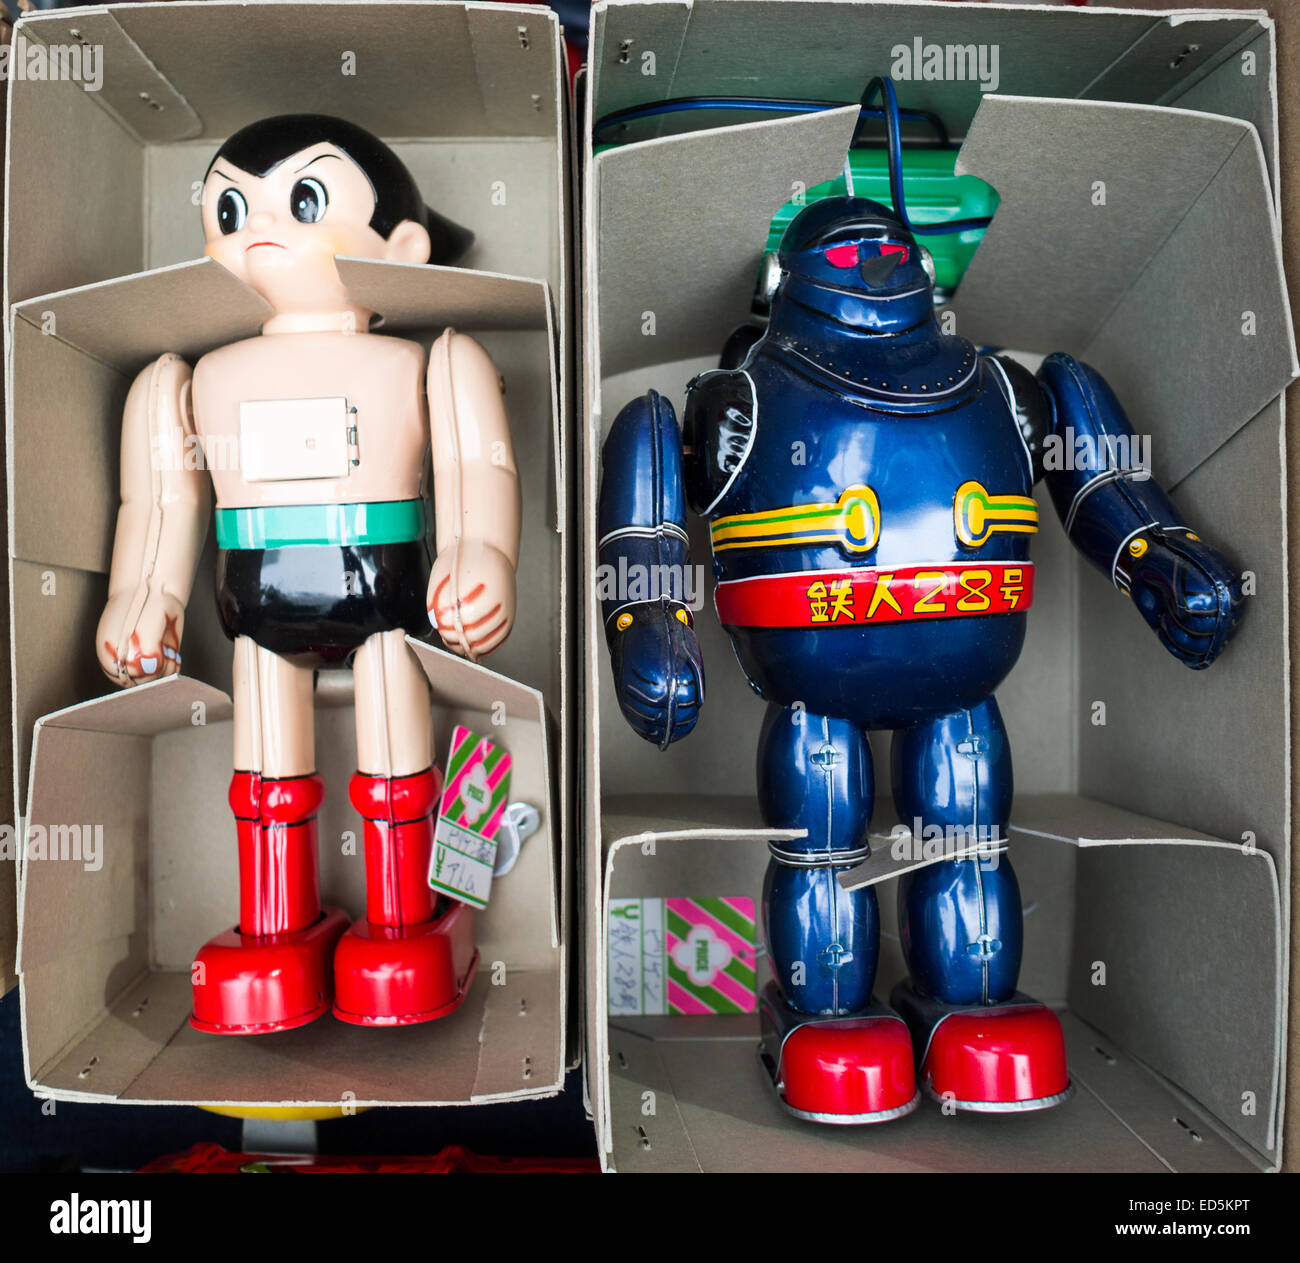 japanese toy robots